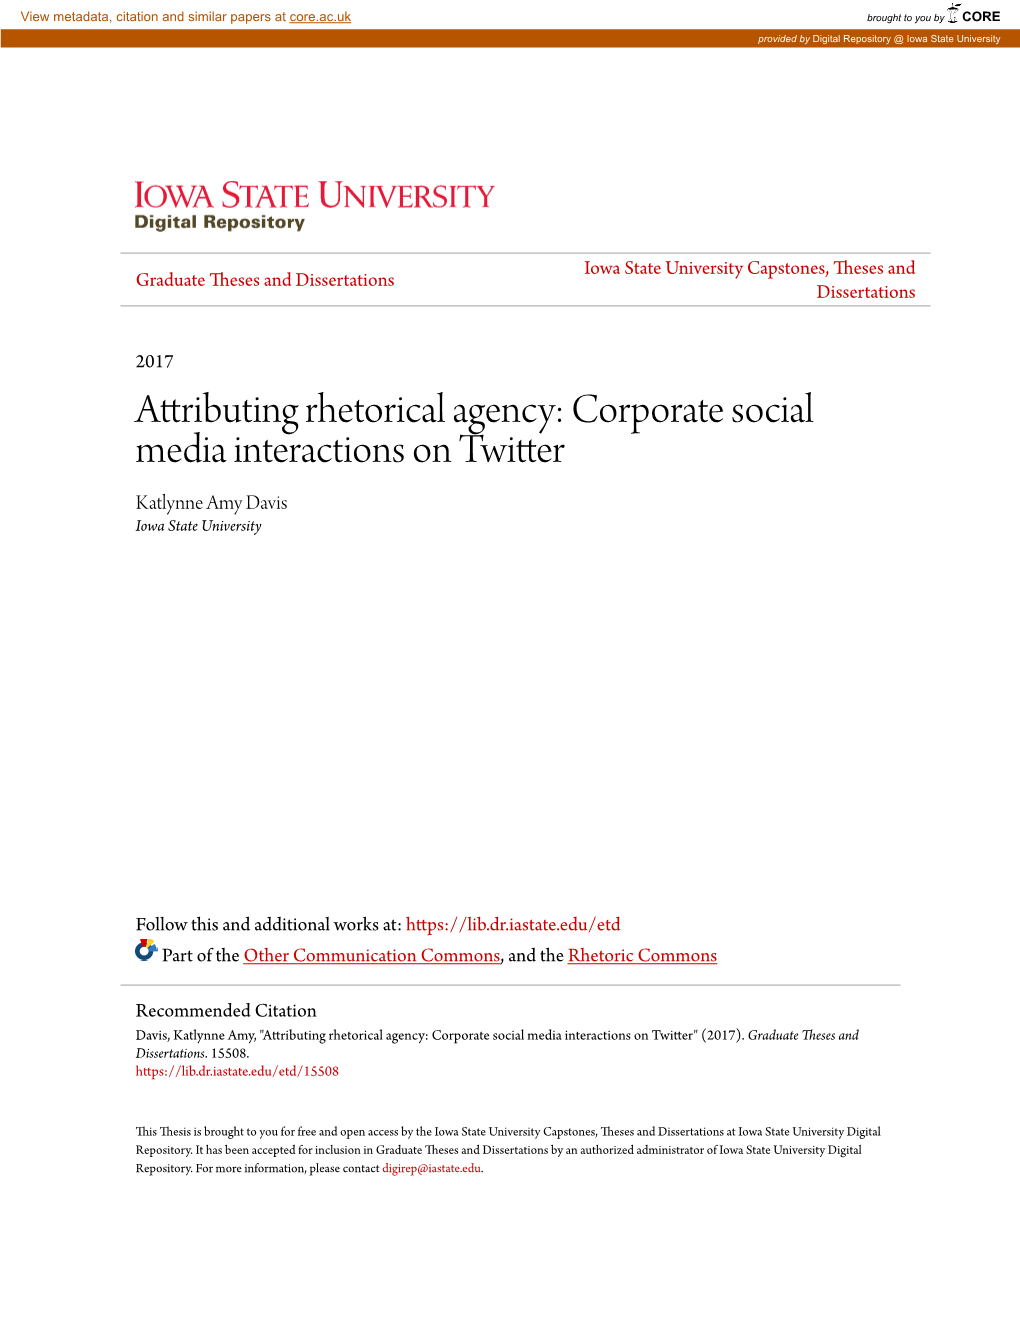 Attributing Rhetorical Agency: Corporate Social Media Interactions on Twitter Katlynne Amy Davis Iowa State University